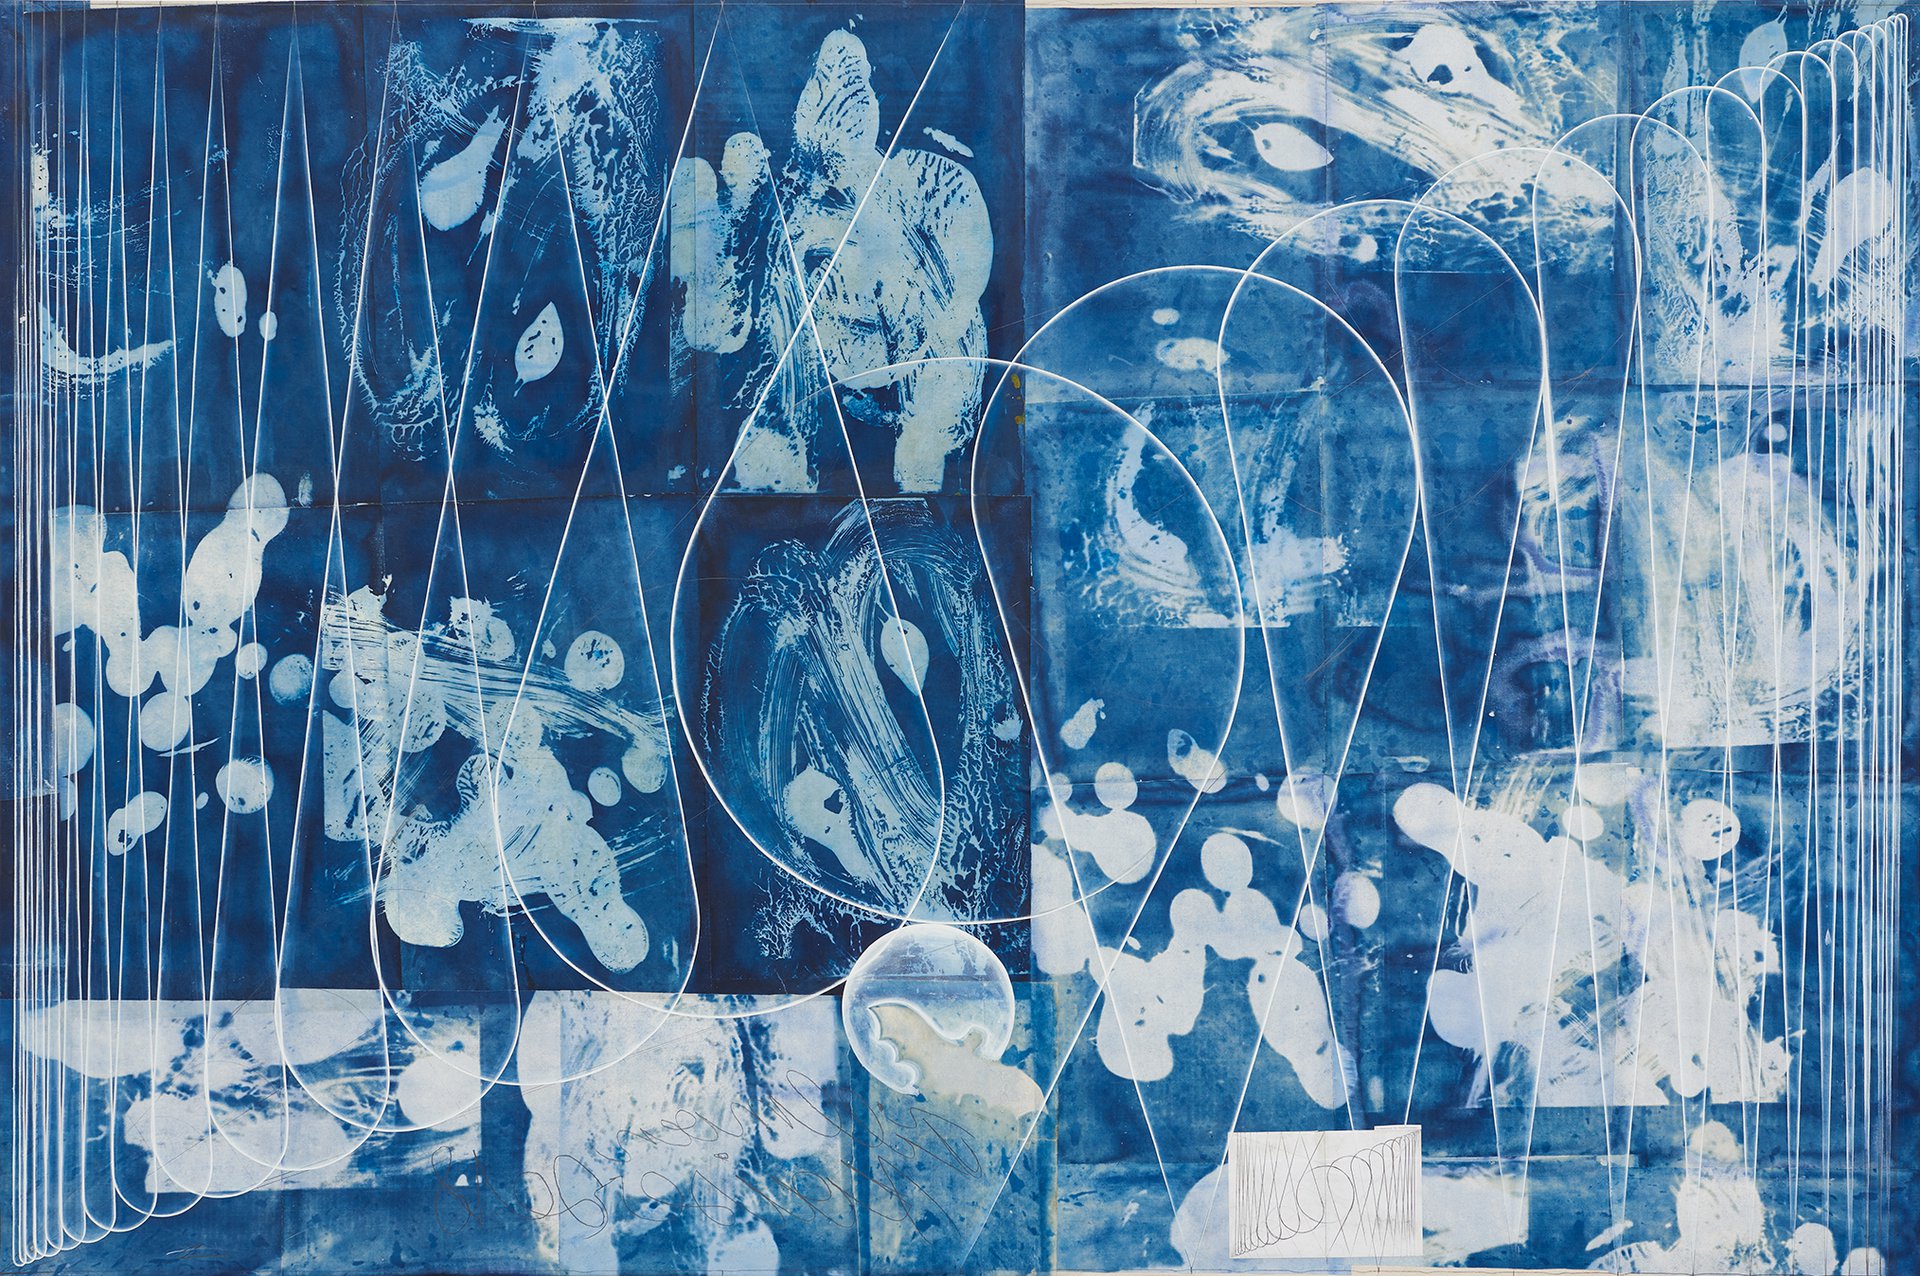 Tillman KaiserUntitled, 2018Cyanotype and egg tempera on paper on canvas200 x 300 cm